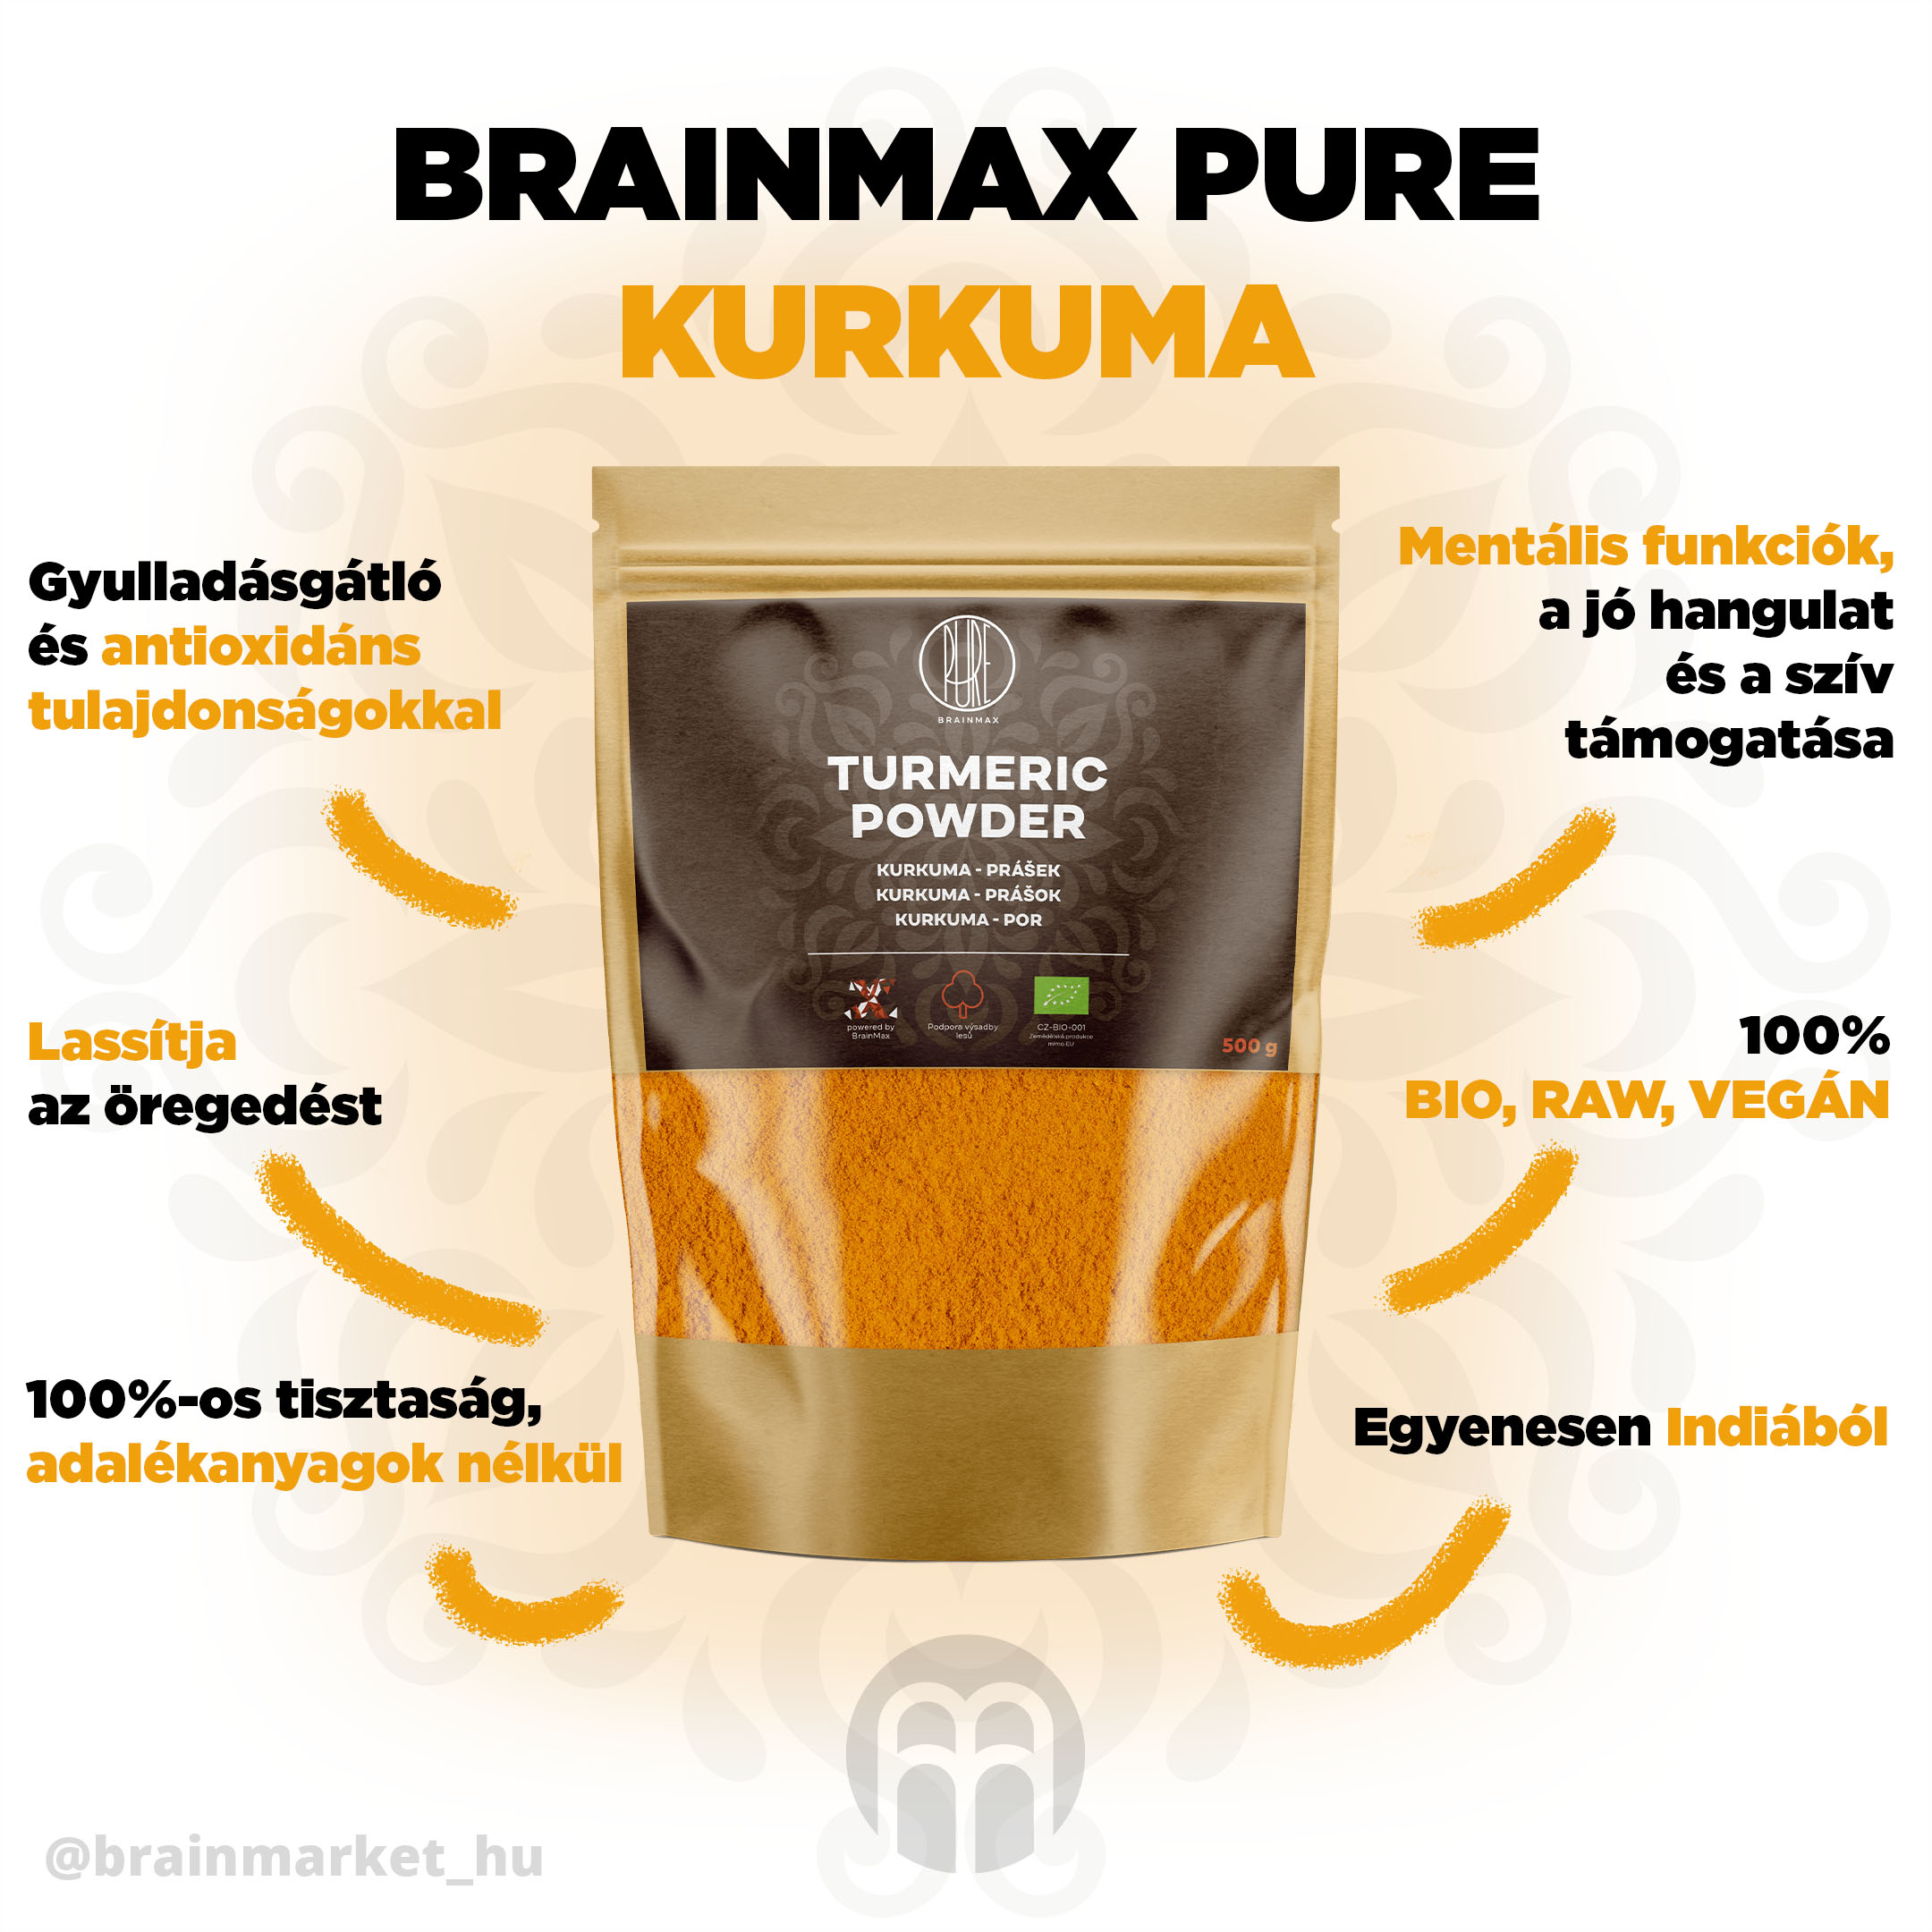 kurkuma-agymax-pure-infographics-brainmarket-cz